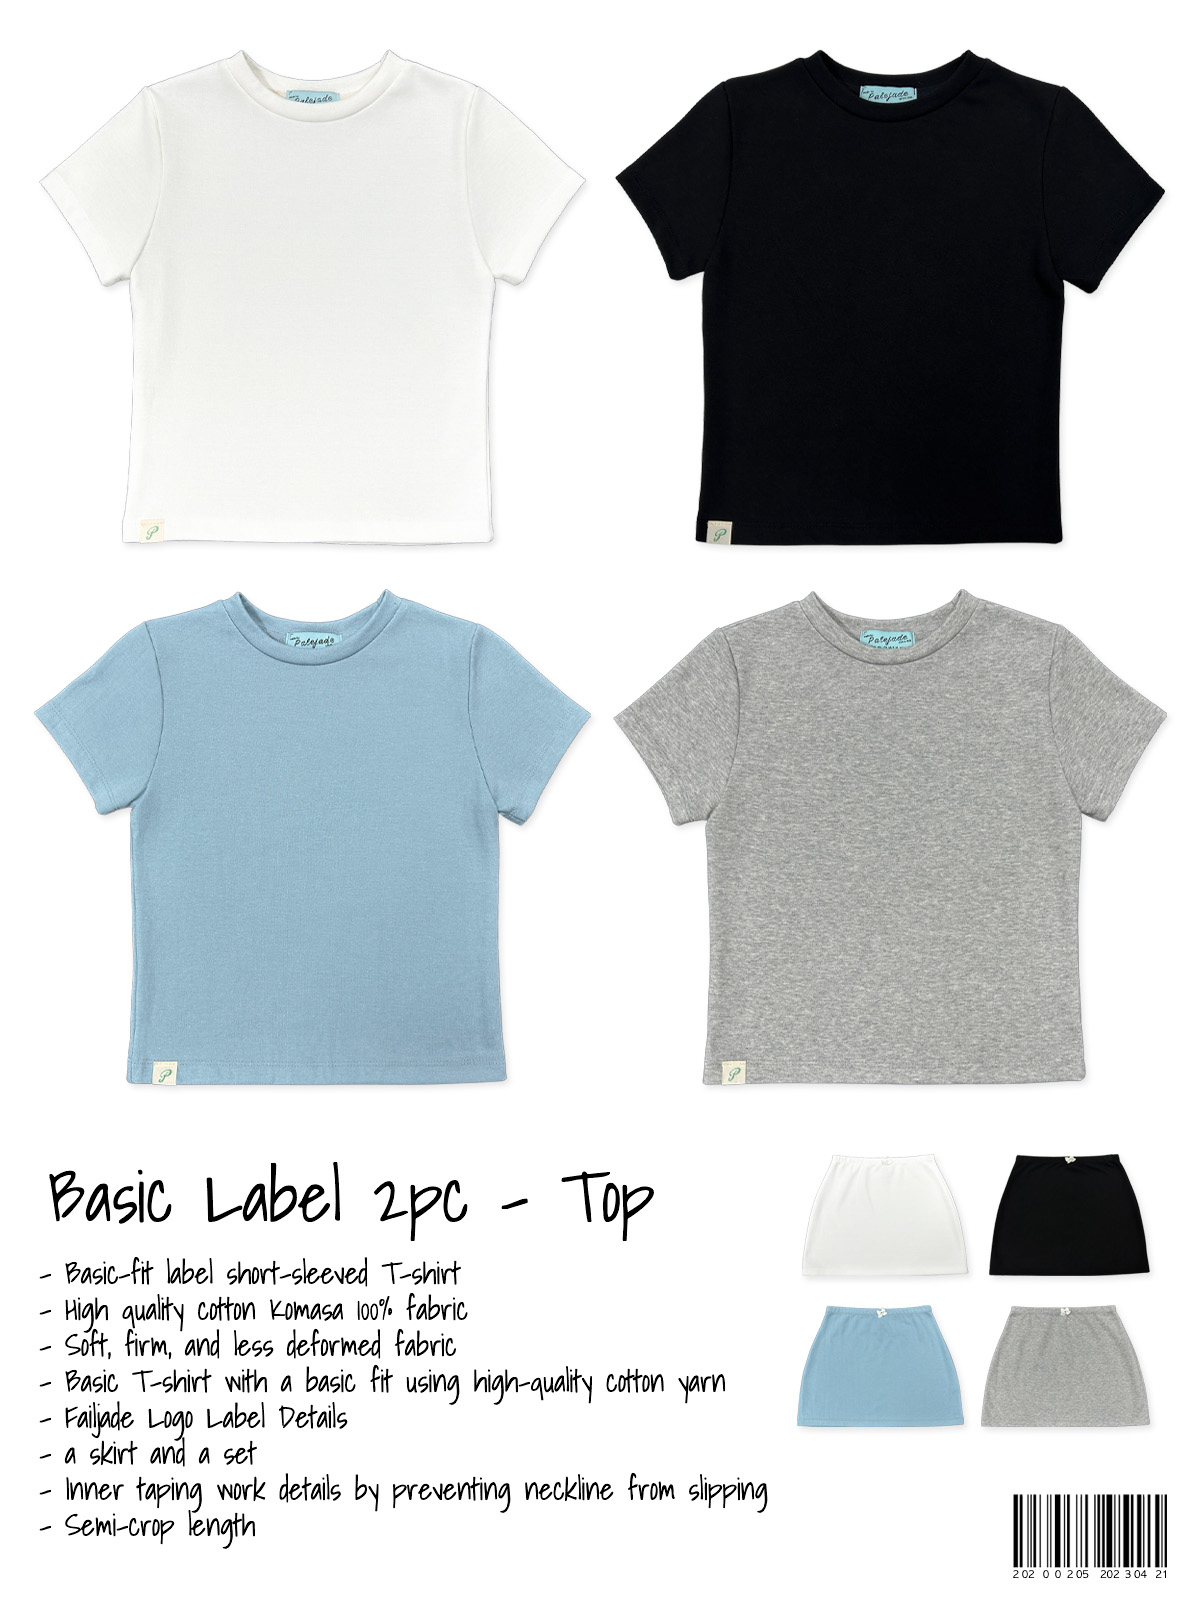 Basic Label 2pc - Top